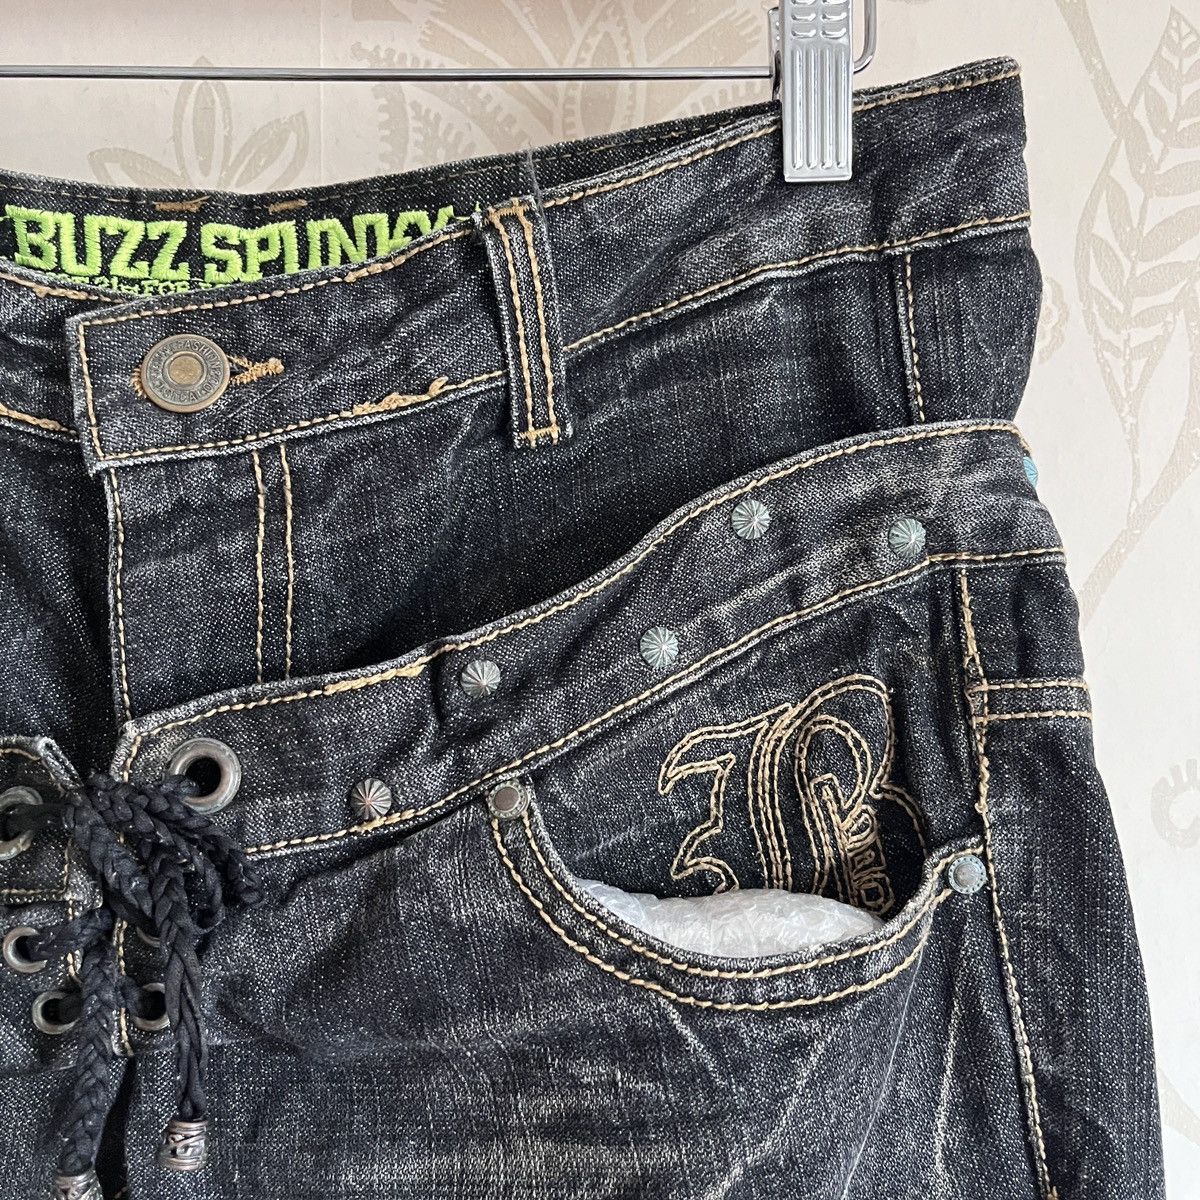 Buzz Rickson's - Rare Distressed Undercover Double Waist Buzz Spunky Jeans - 5